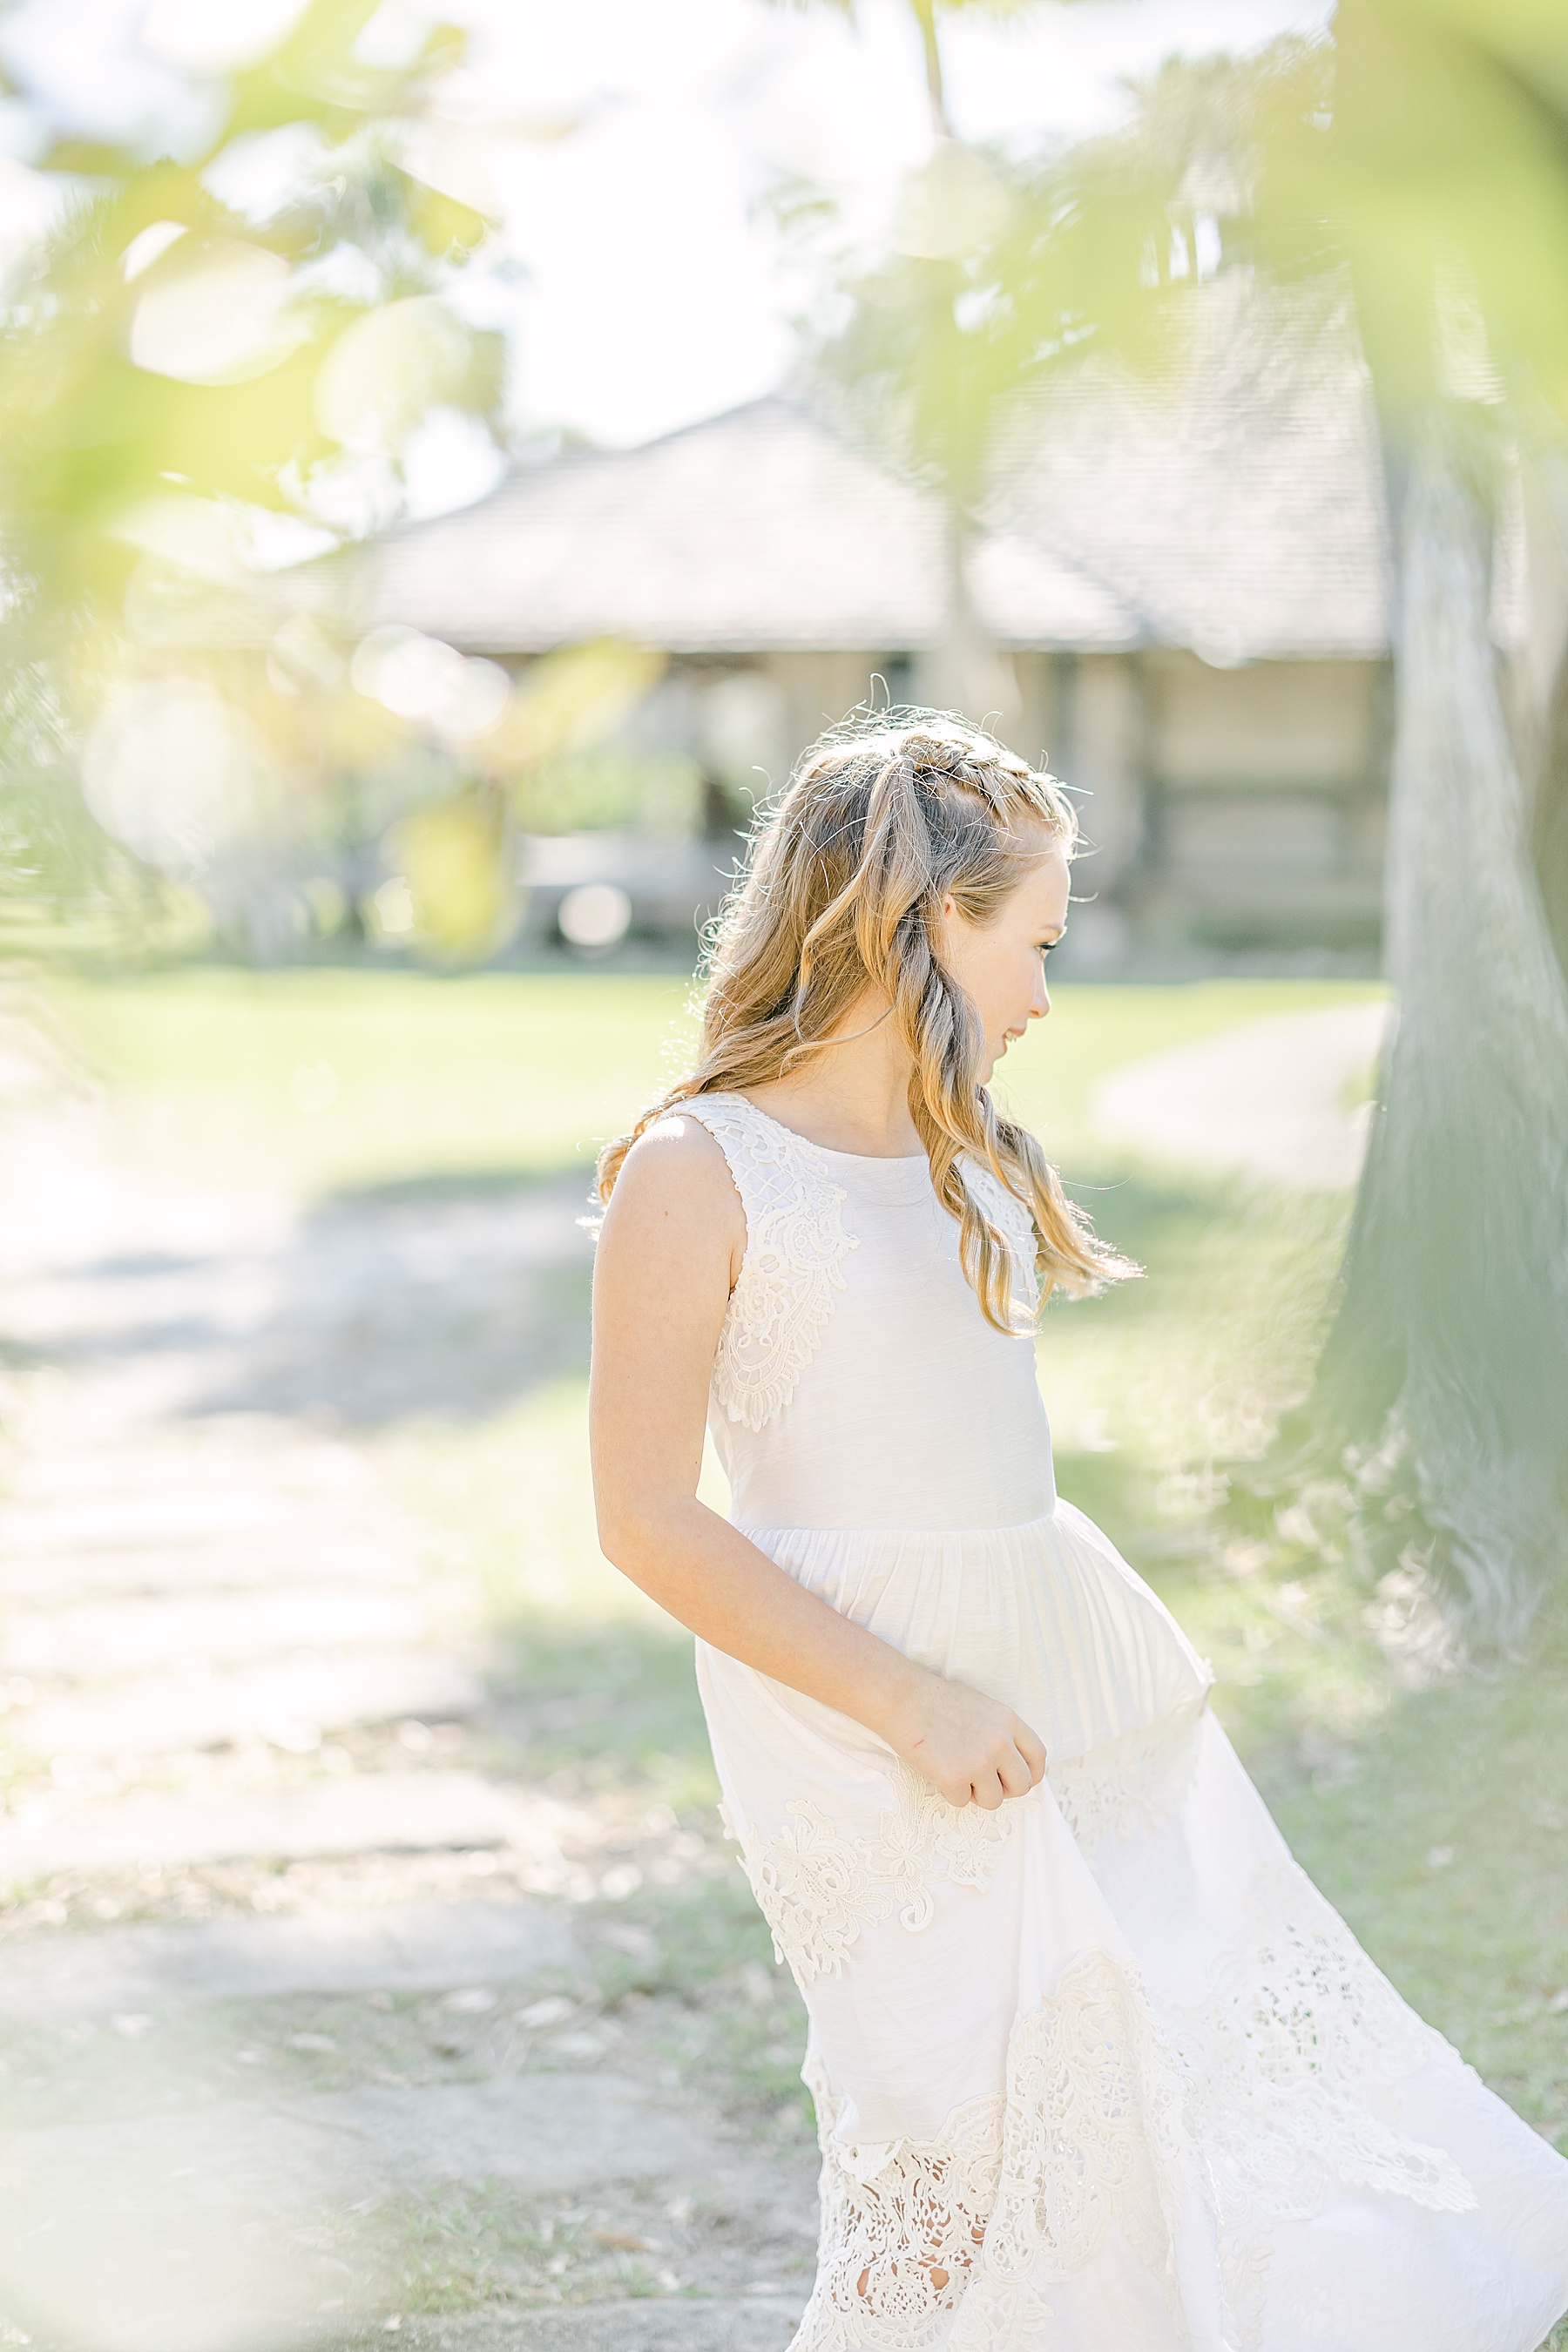 little girl in long white dress twirling in the sunlight on the grass